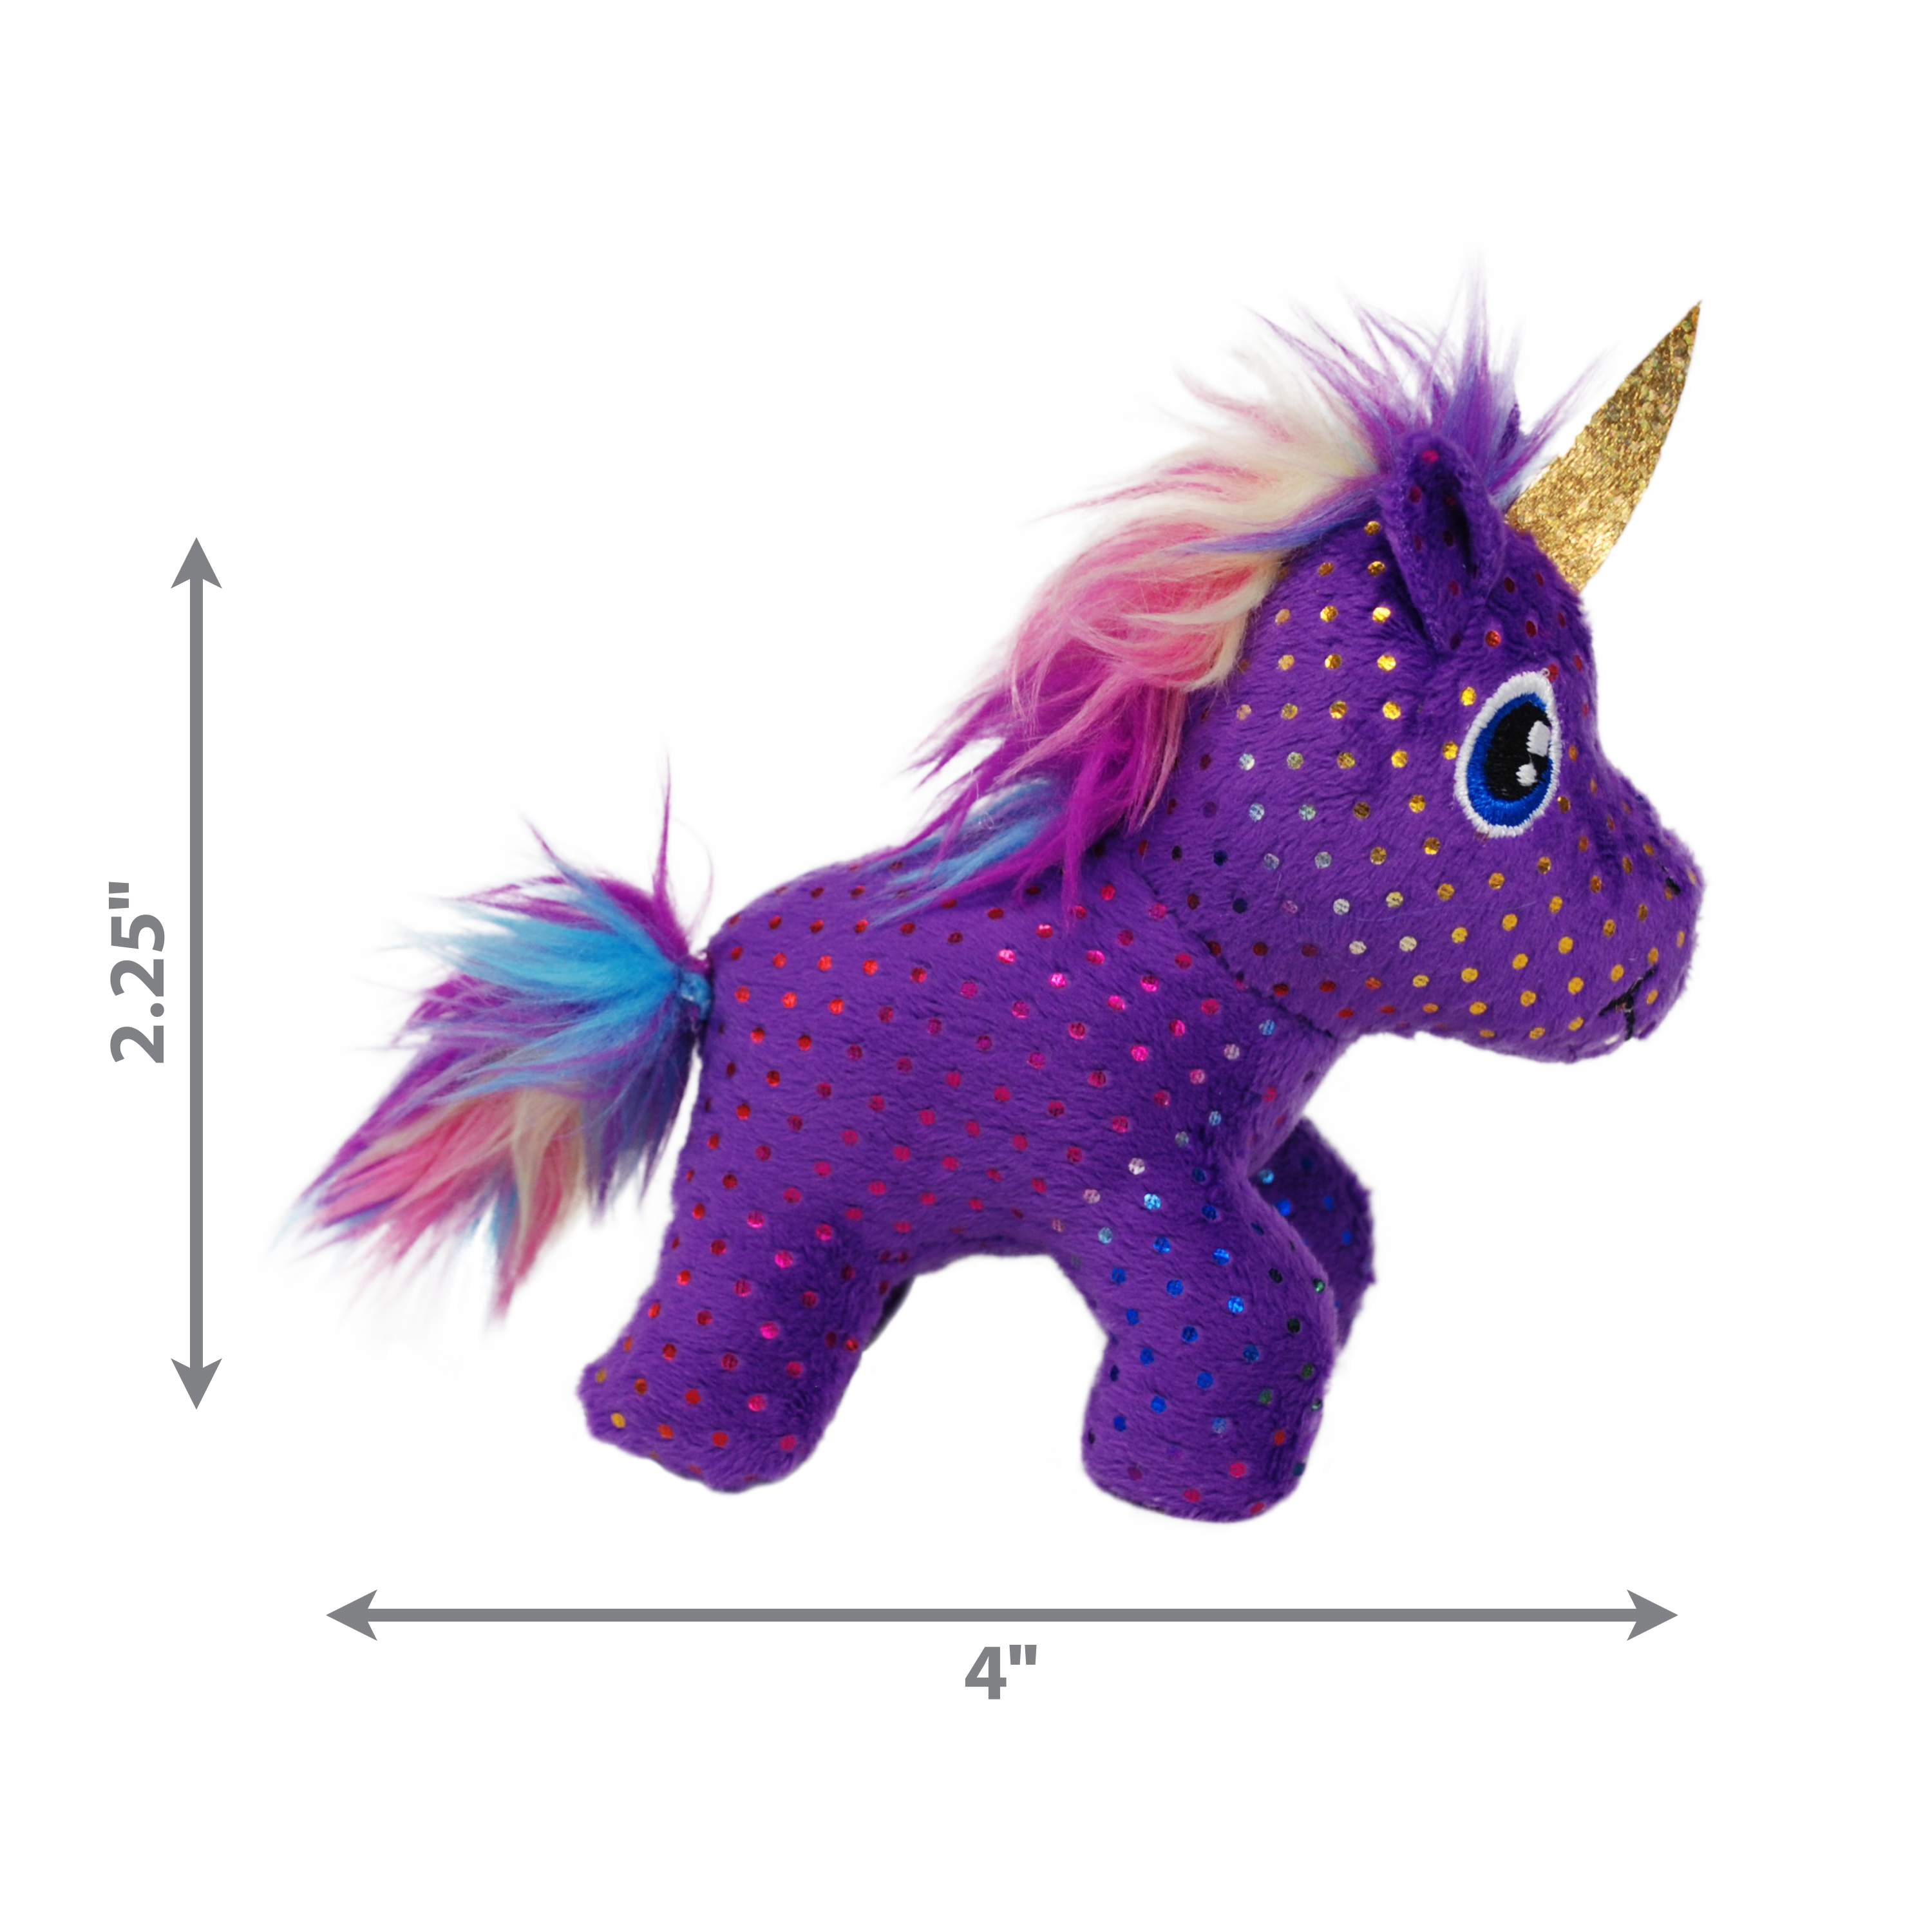 Enchanted Buzzy Unicorn dimoffpack product image